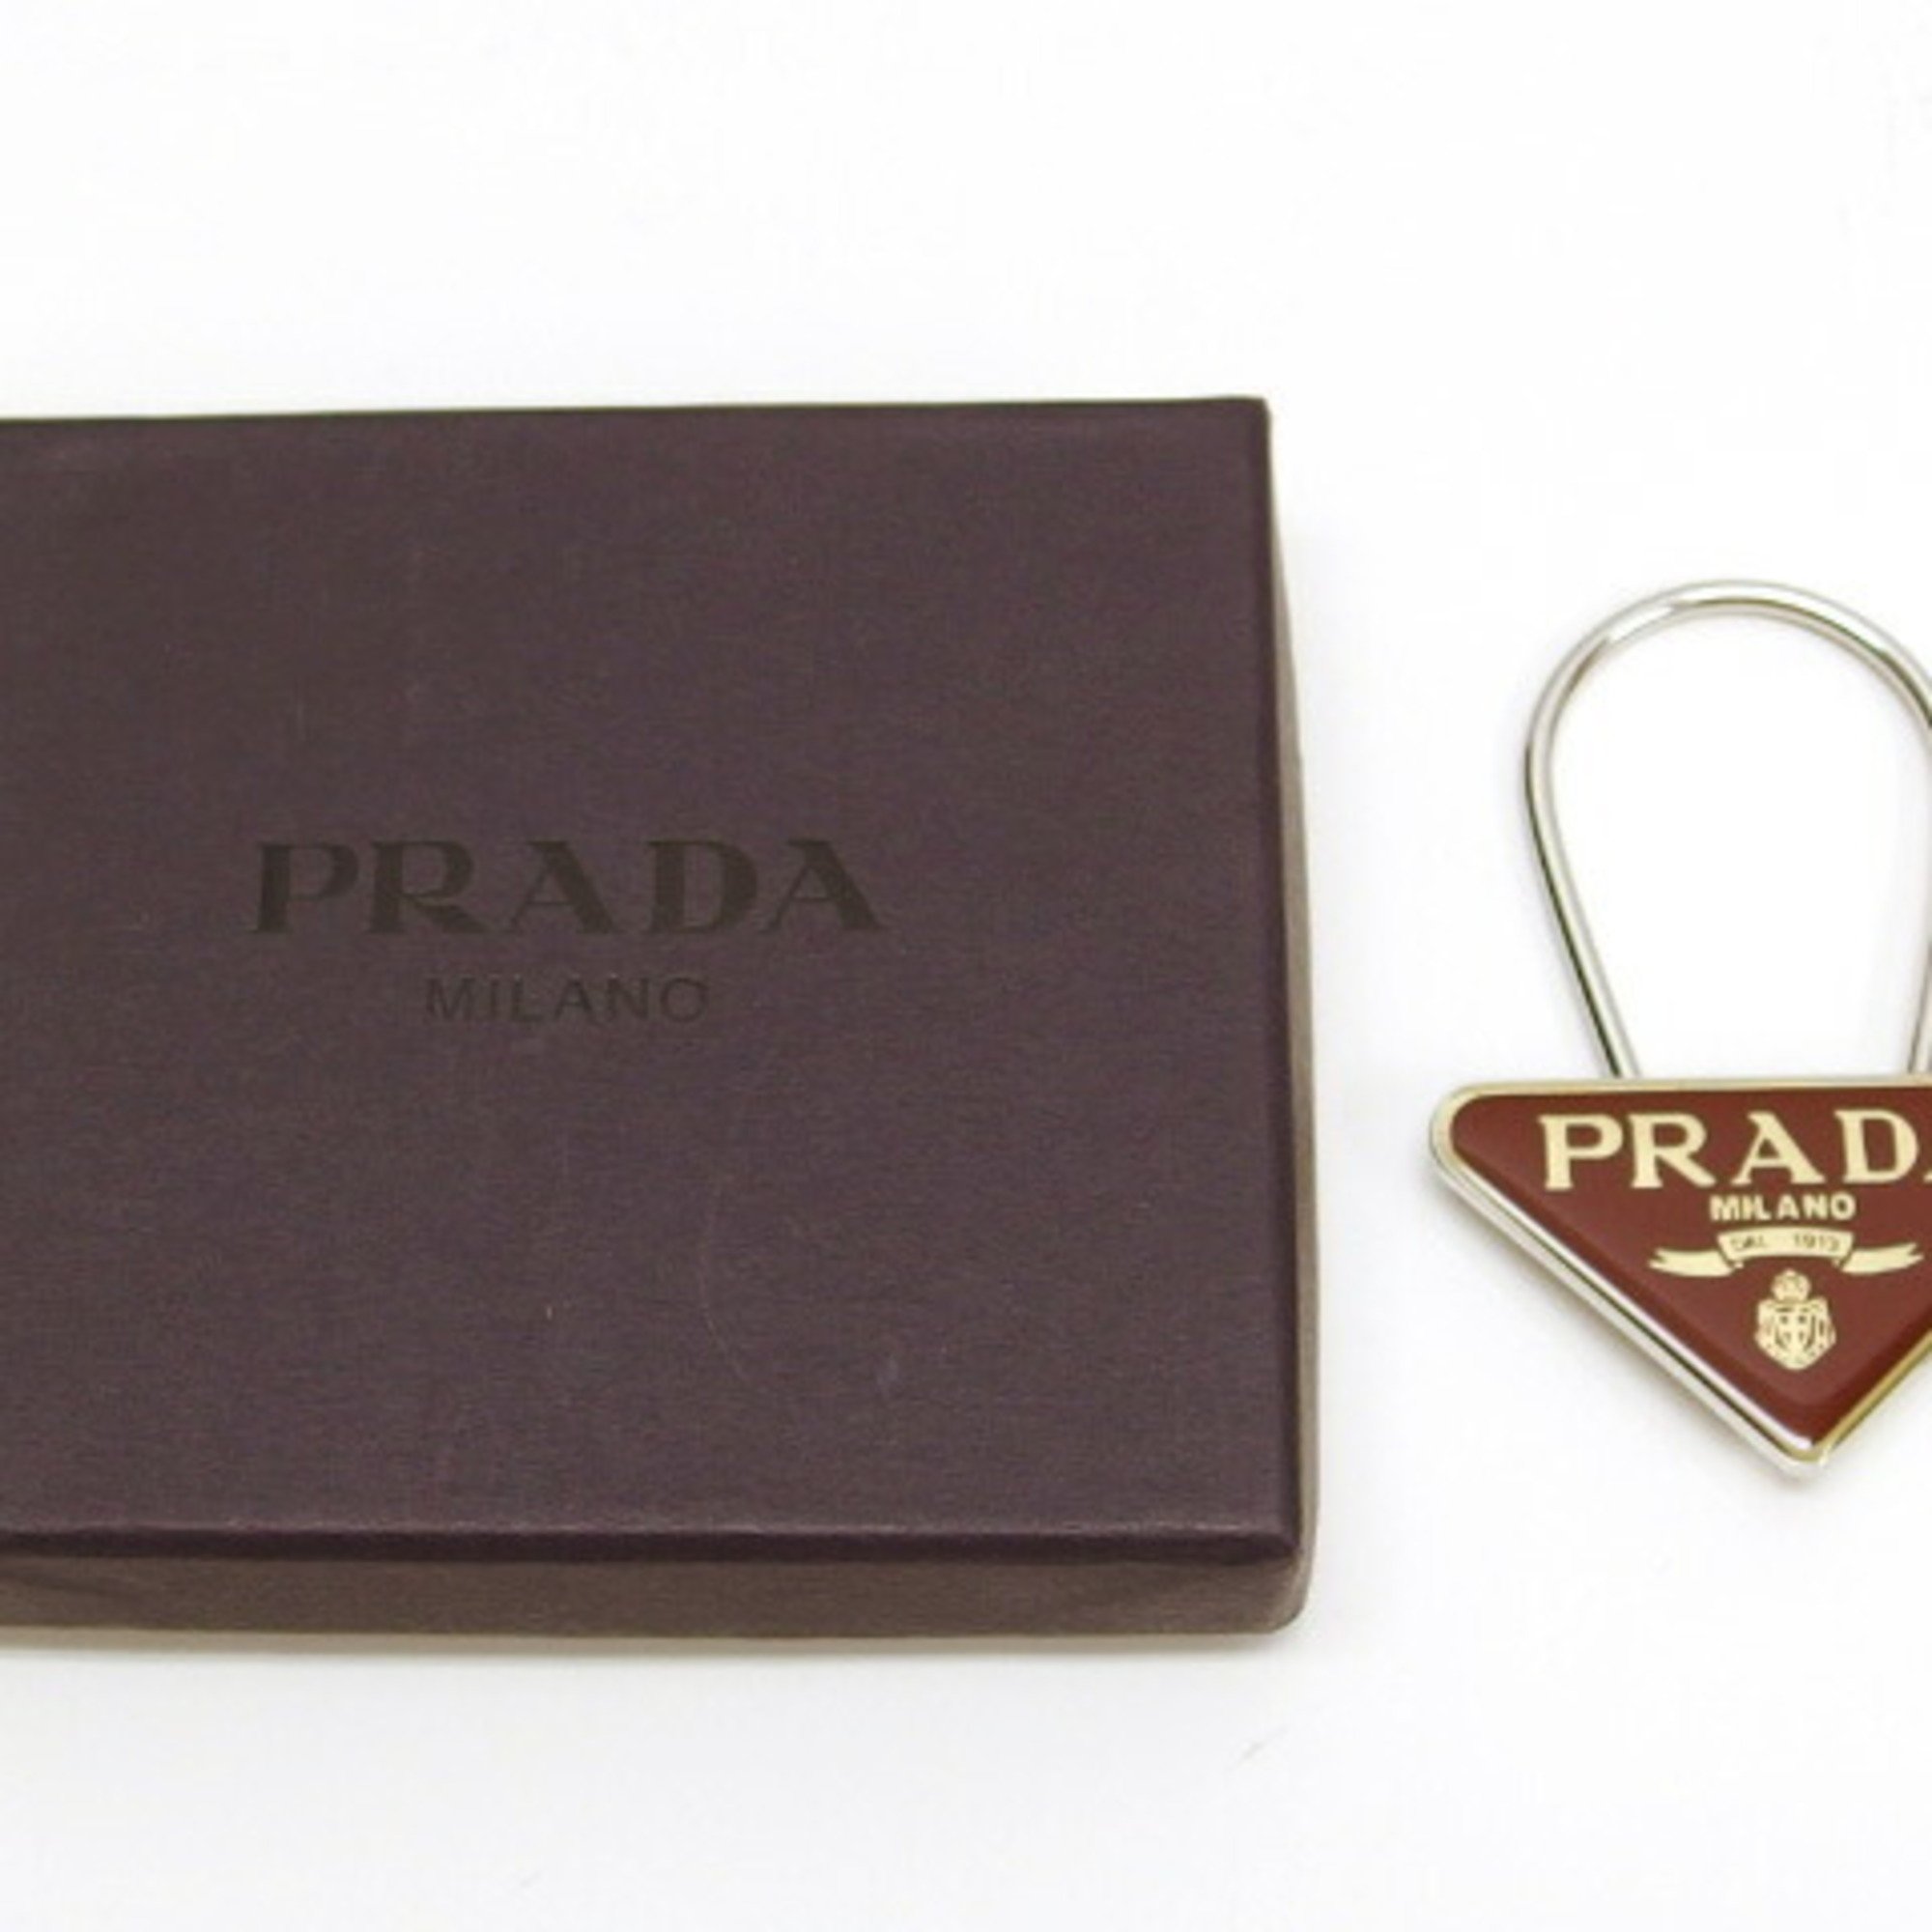 Prada Triangle Key Hook Charm Bordeaux (Deep Red)